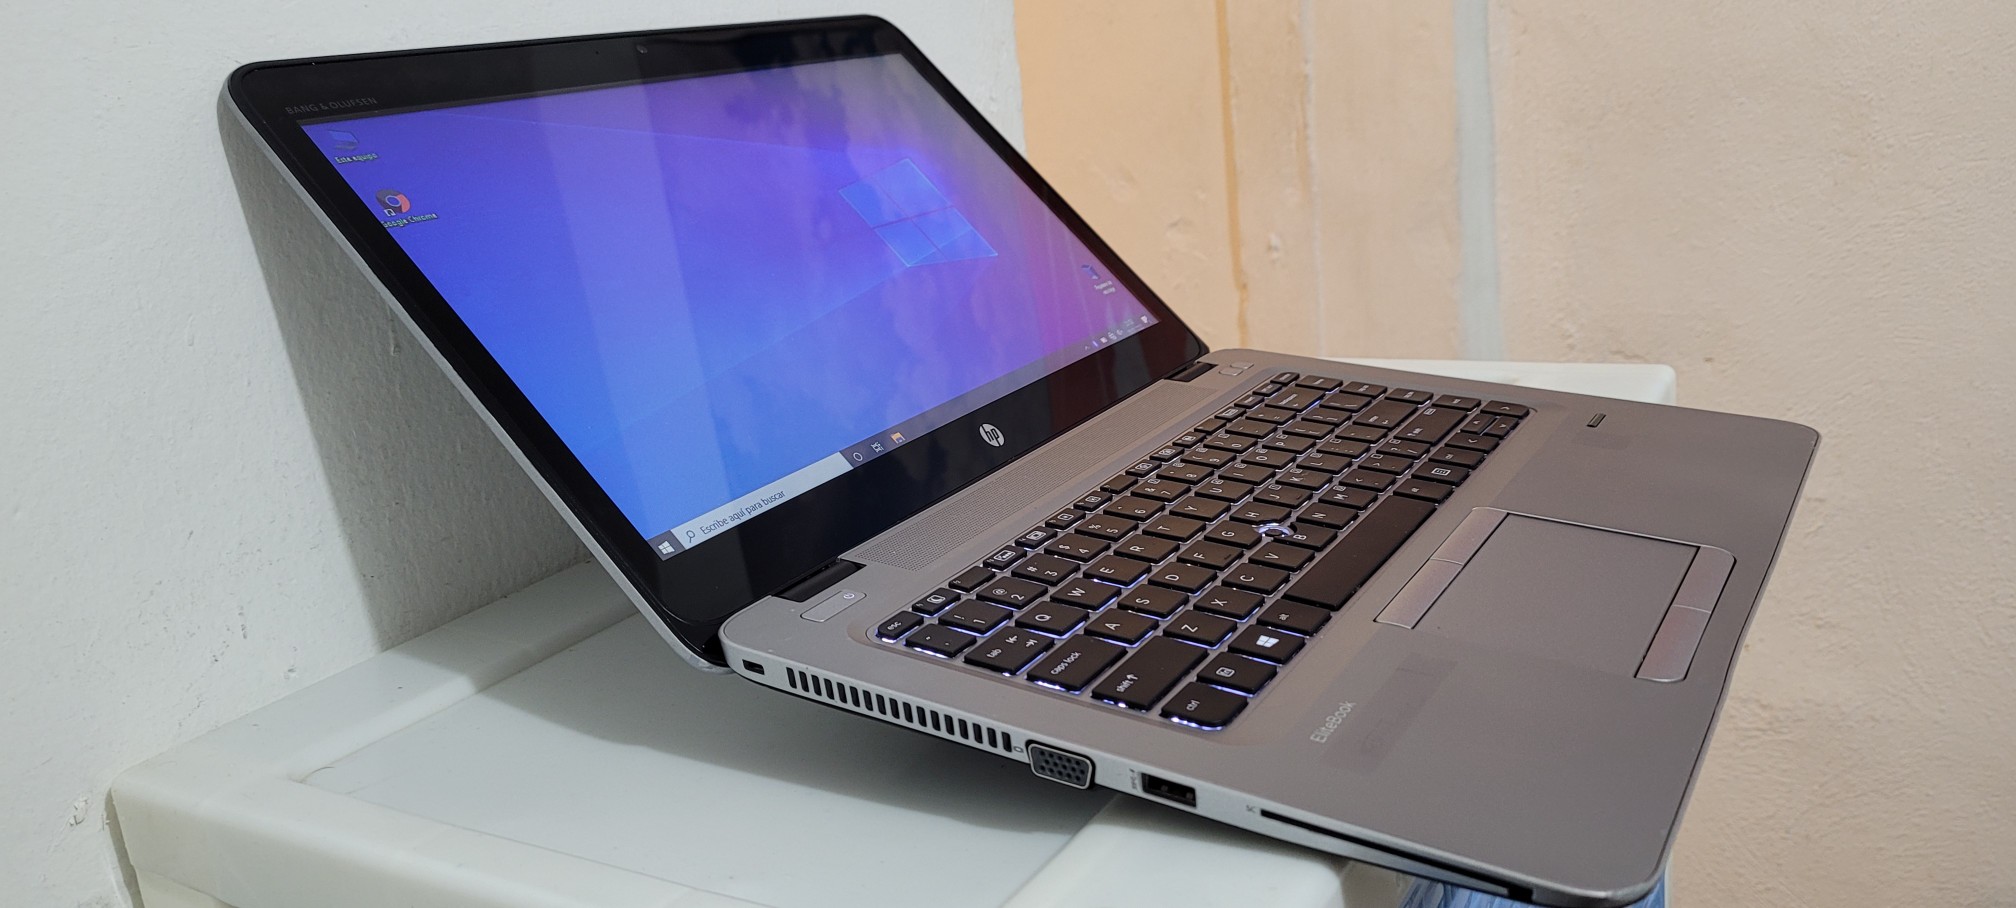 computadoras y laptops - Laptop hp Slim G2 14 Pulg Core i5 6ta Ram 8gb ddr4 Disco 500gb SSD 1080p 1